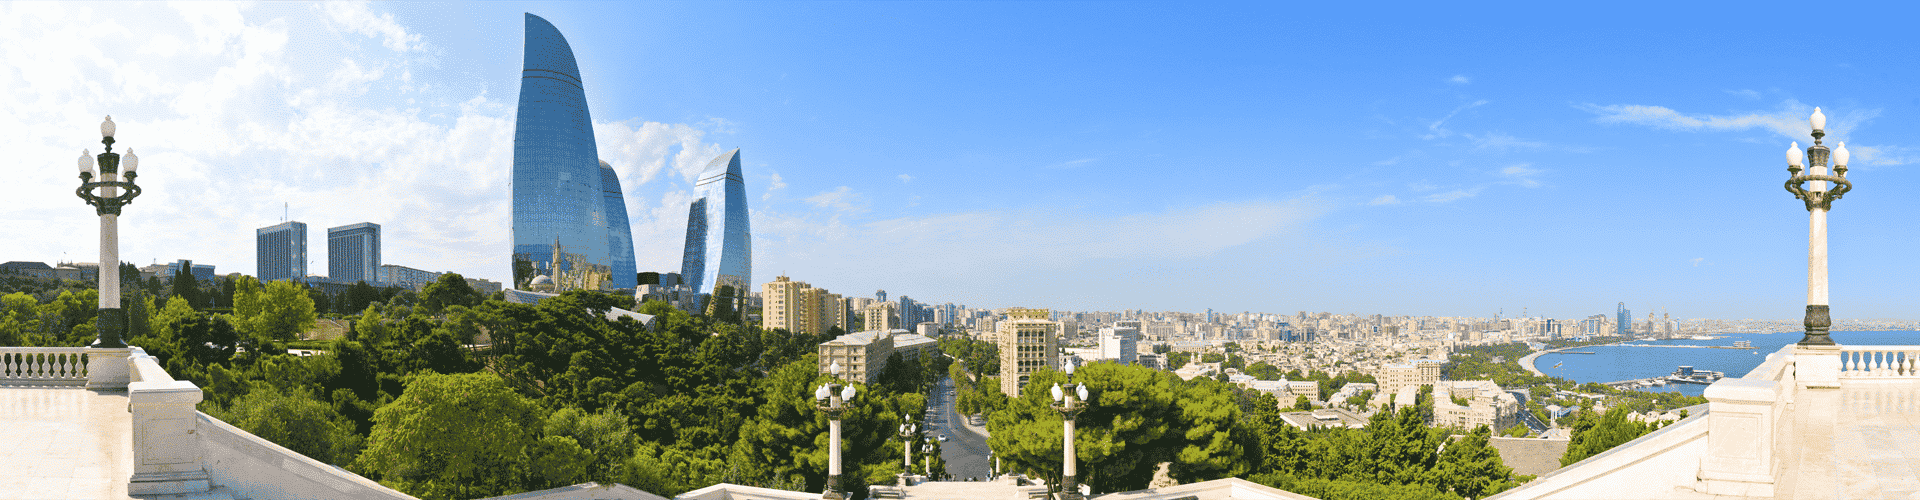 Essential Free Tour Baku Banner